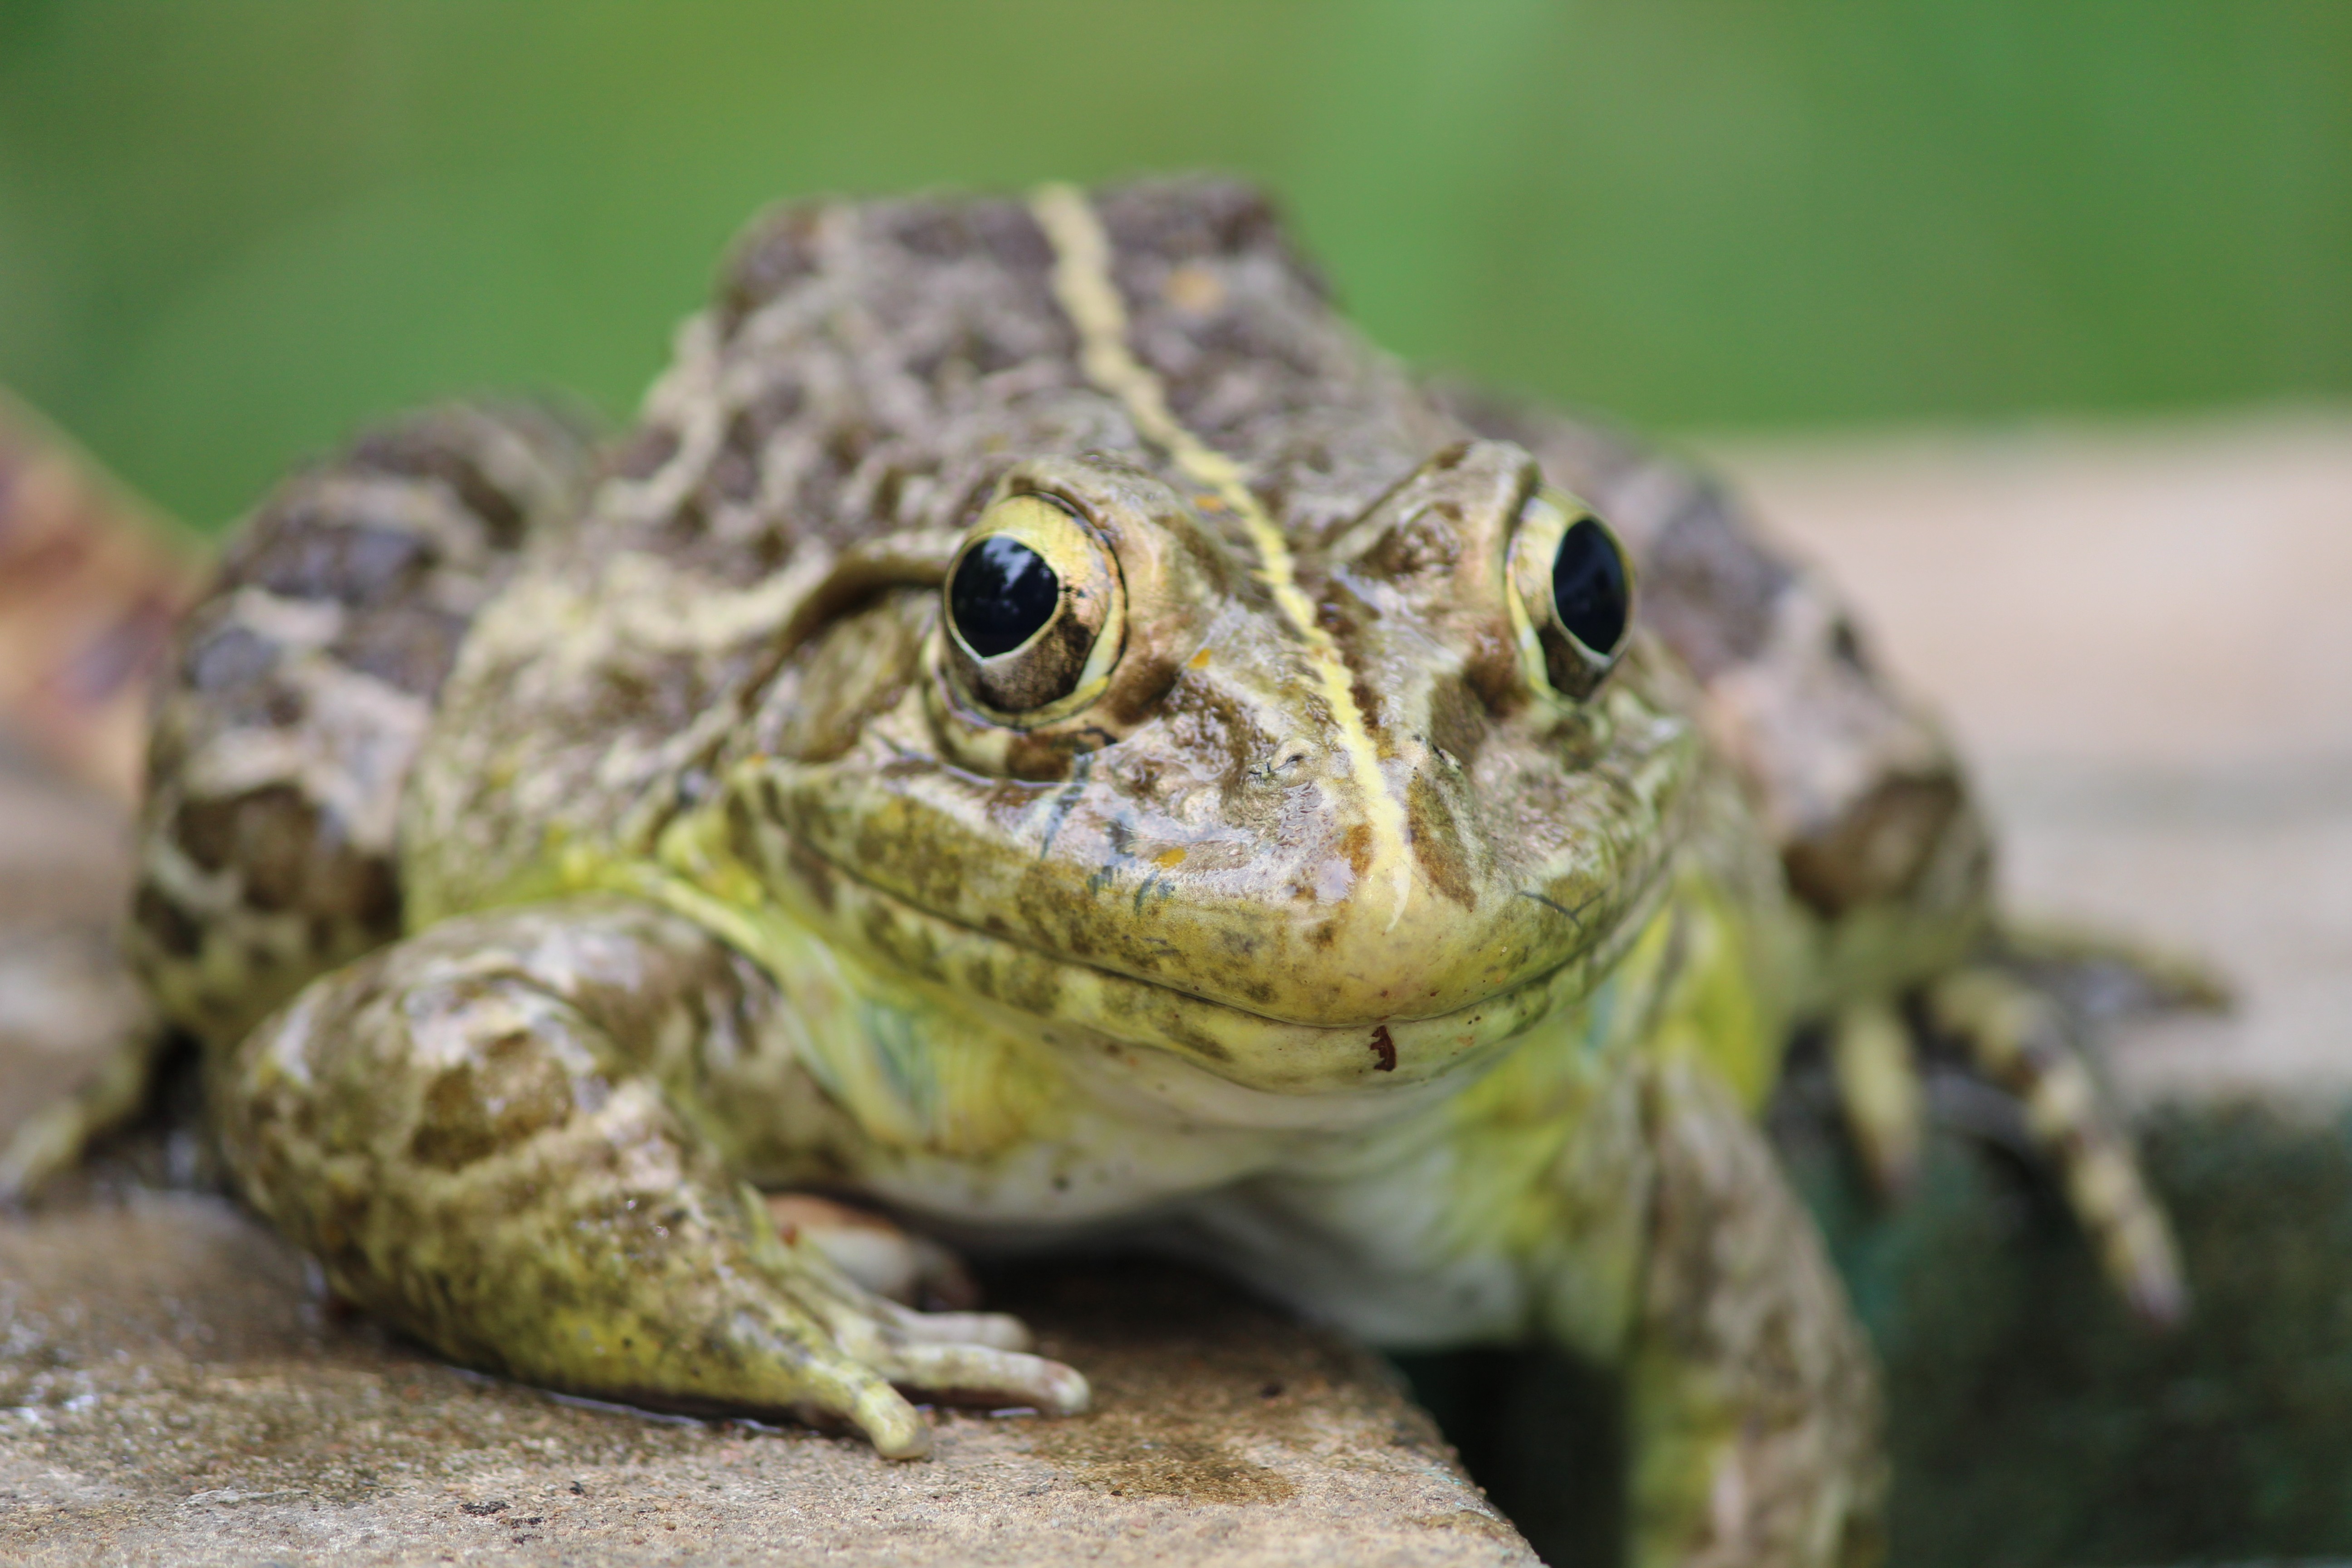 General 5184x3456 amphibian frog animals nature closeup